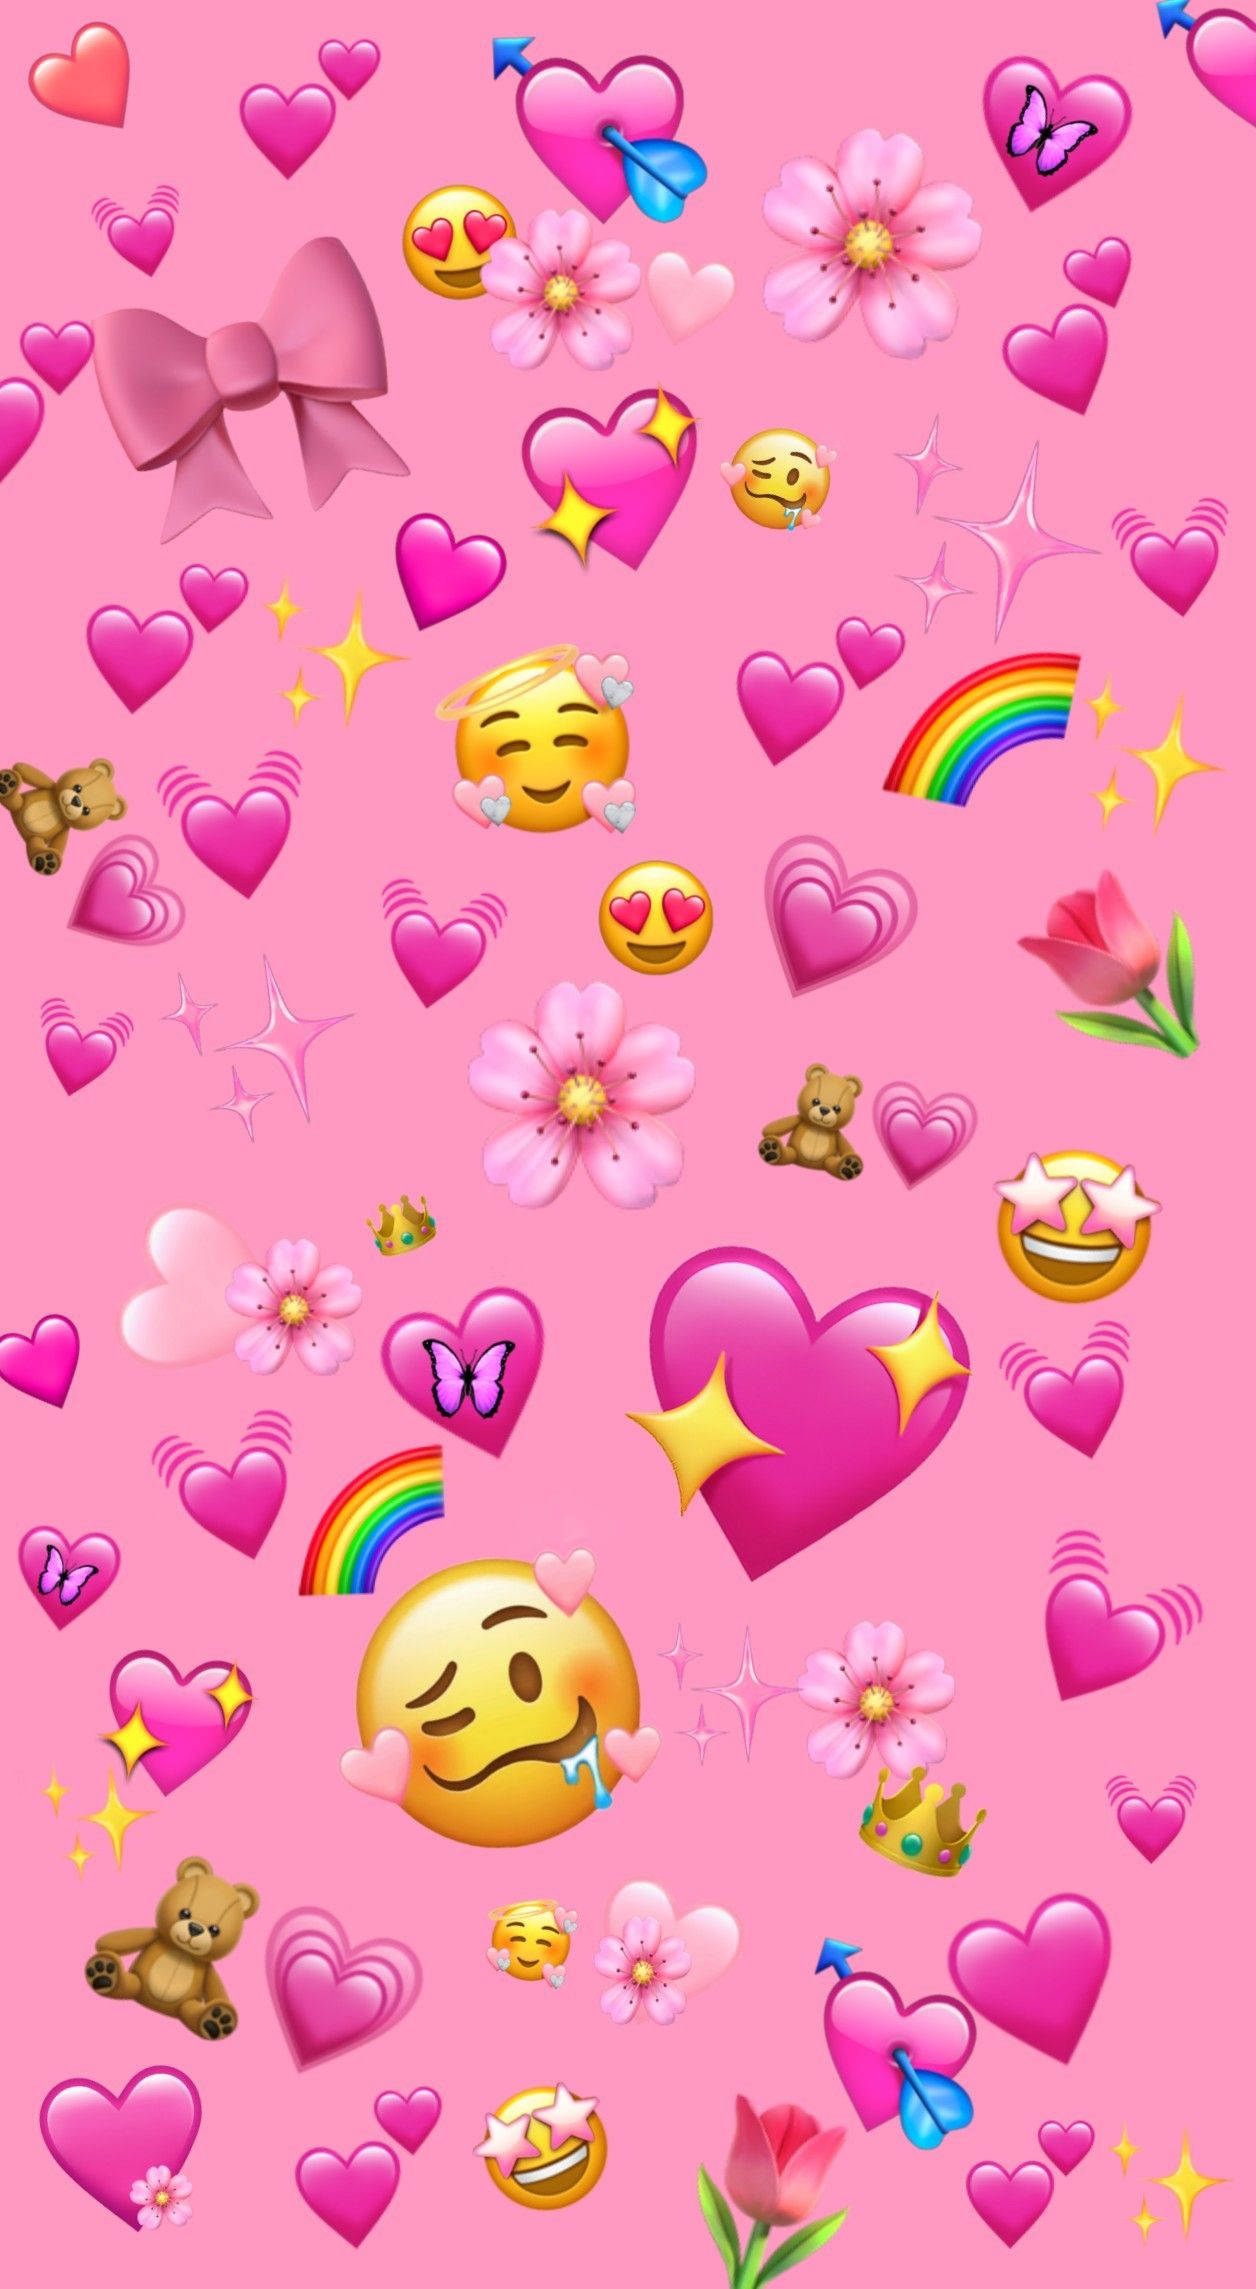 Meaningful Emoji wallpaper ideas. emoji wallpaper, emoji, emoji background